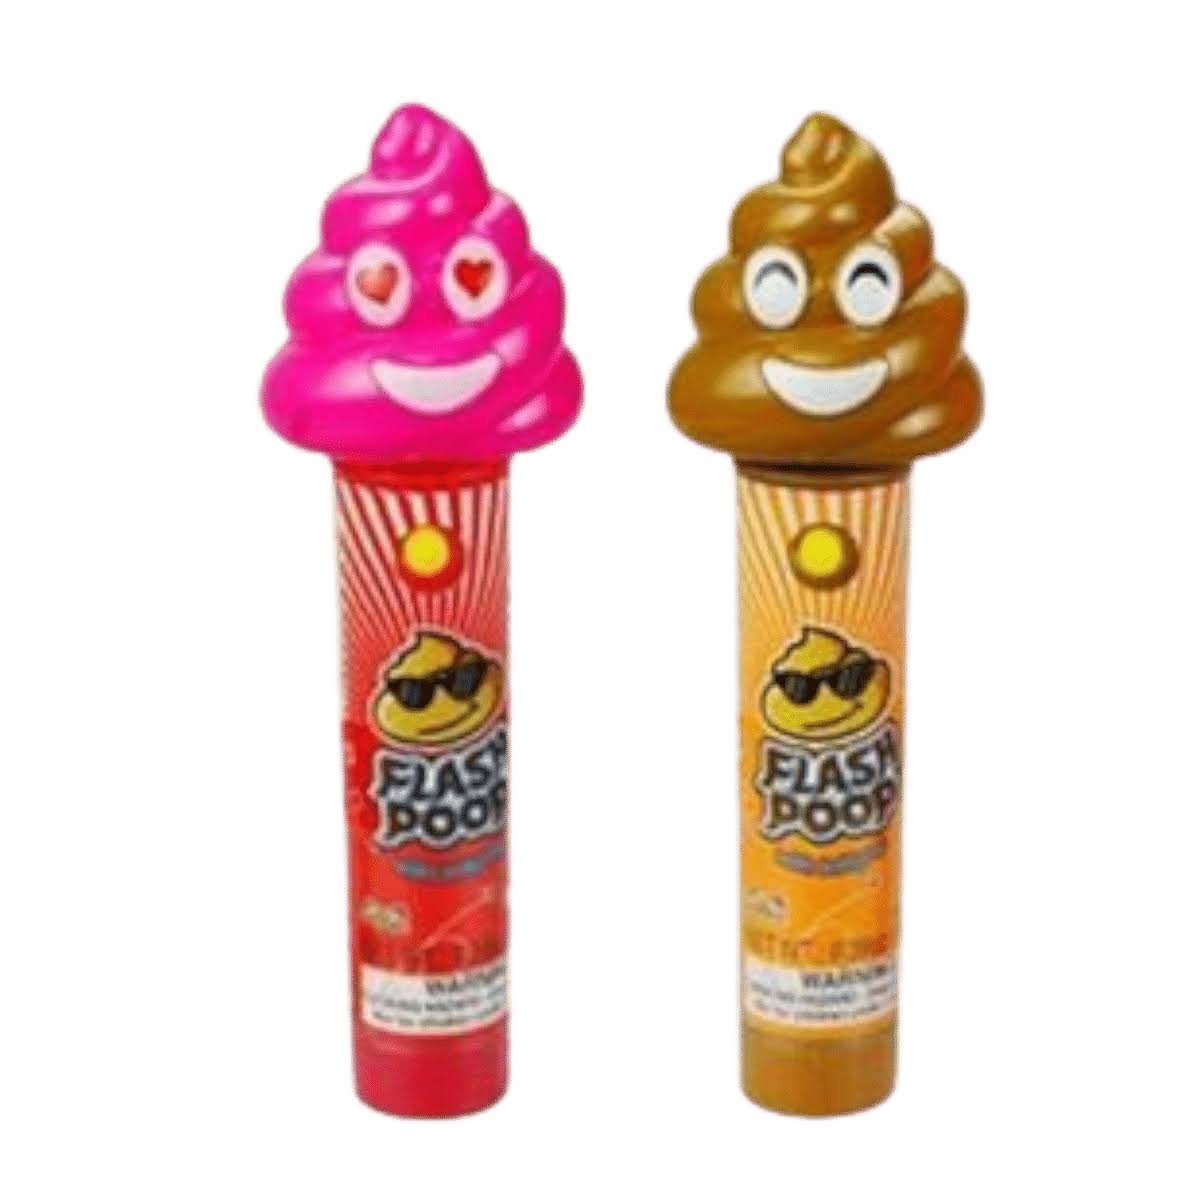 Kidsmania Flash Poop with Lollipop 0.39oz